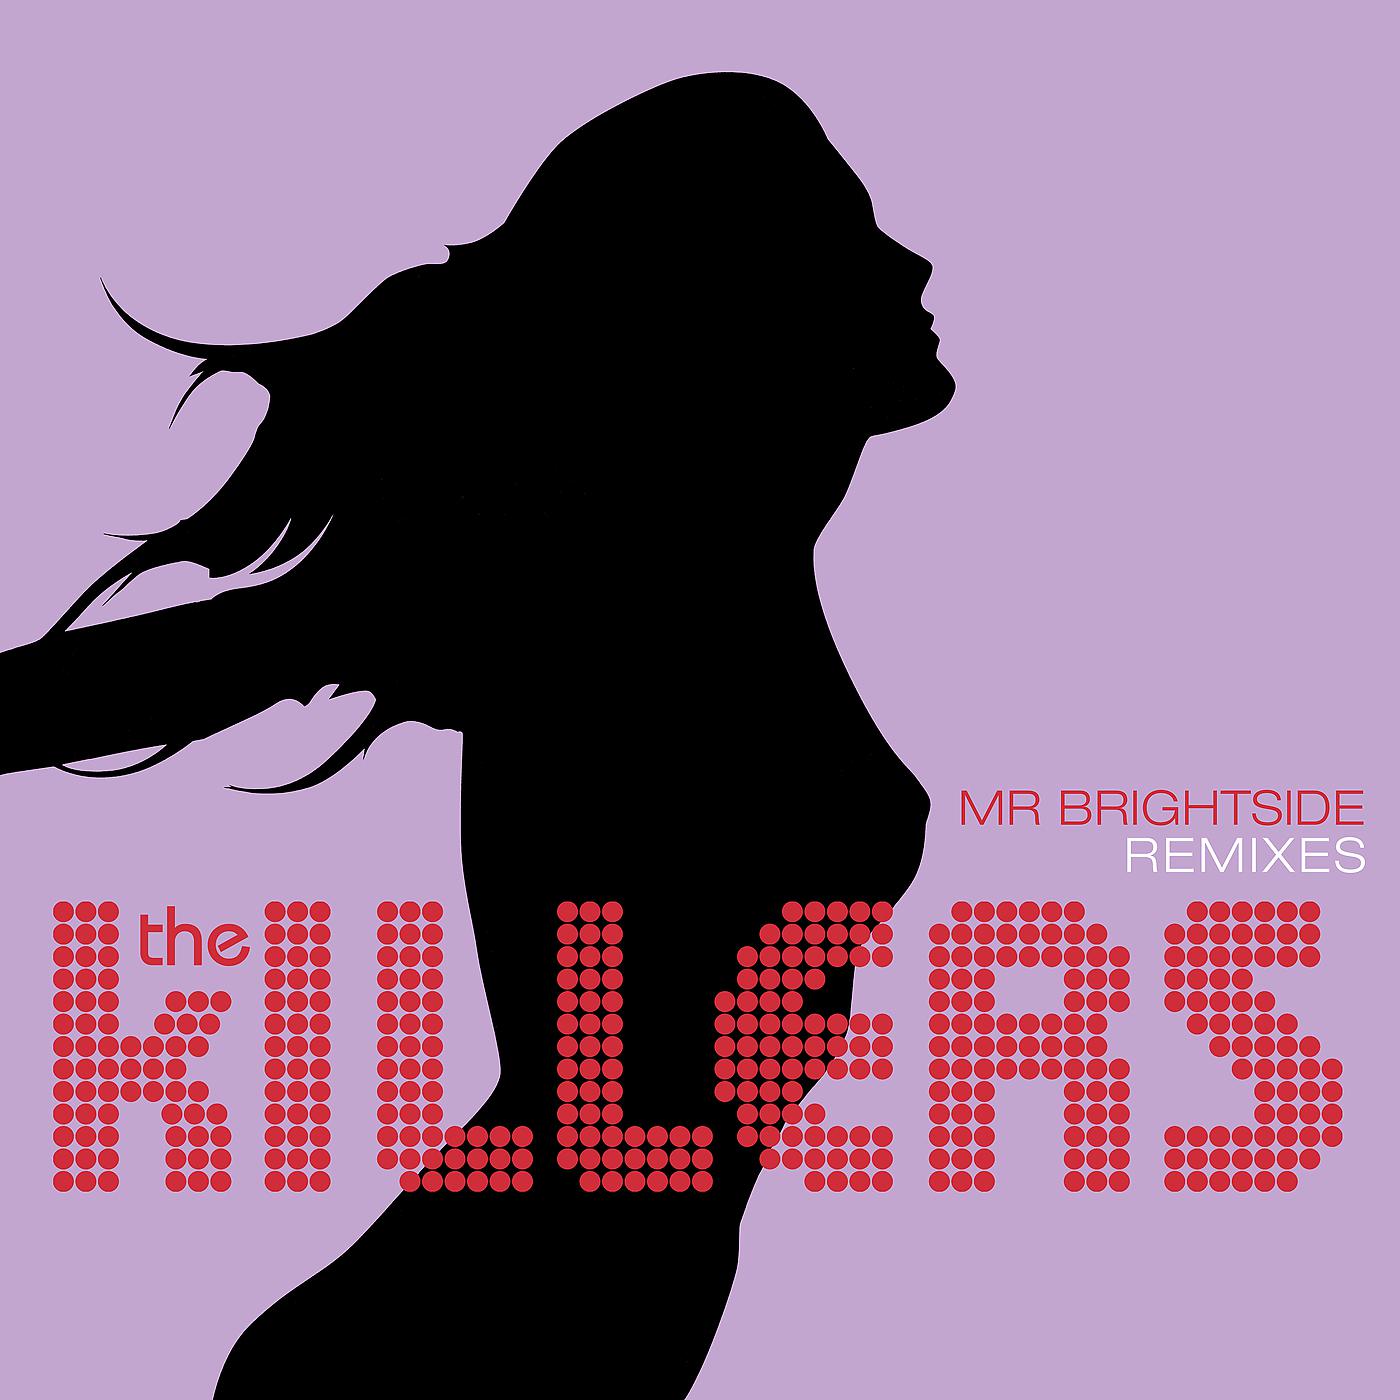 Killers обложка. The Killers - Mr. Brightside альбом. The Killers обложки альбомов. The Killers Mr Brightside обложка. Killer.